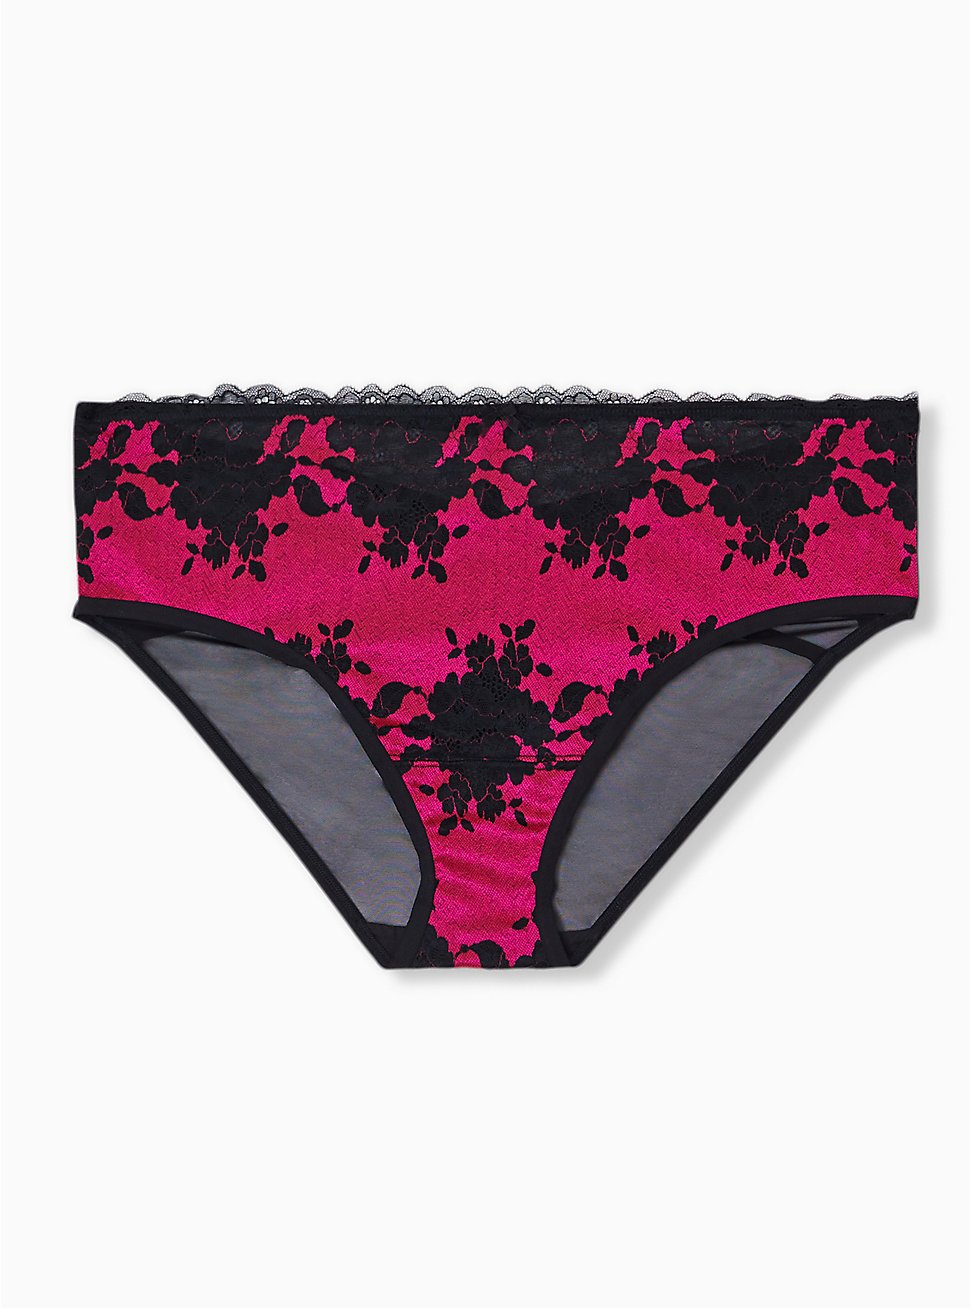 Plus Size - Hot Pink Microfiber & Black Lace Mesh Back Hipster Panty ...